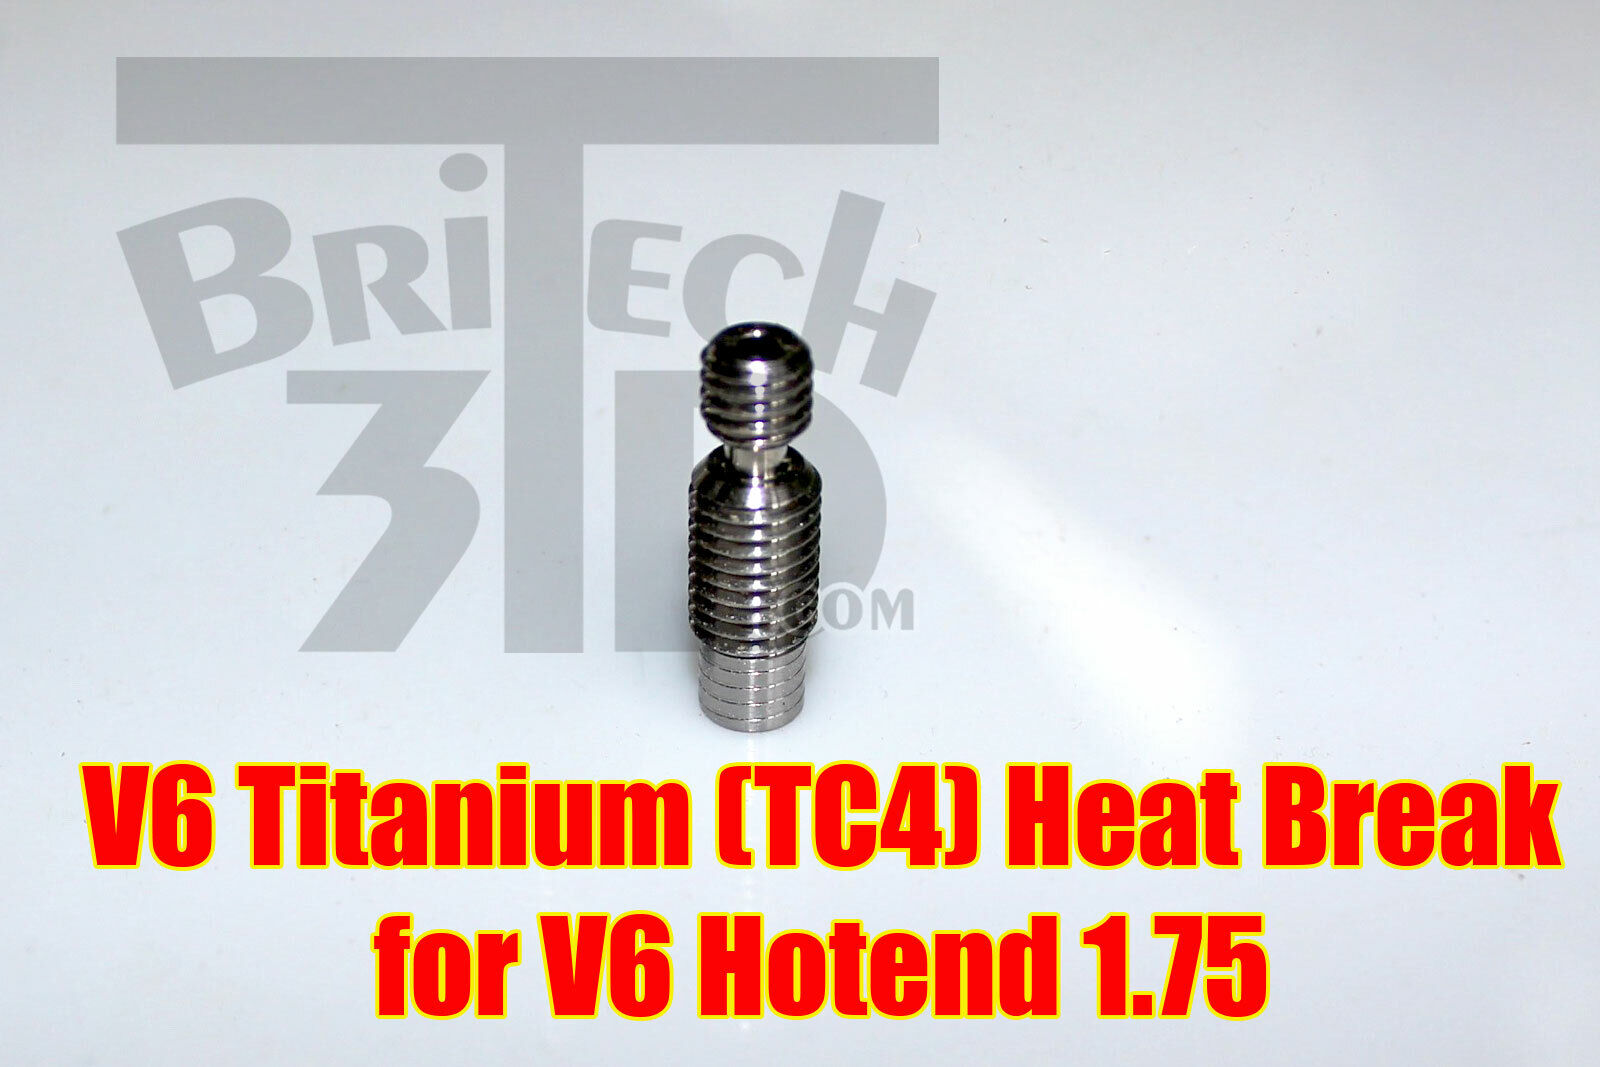 Titanium Heat Break (1.75mm) for Prusa i3, JHead & Compatible Hotends 7mm Thread